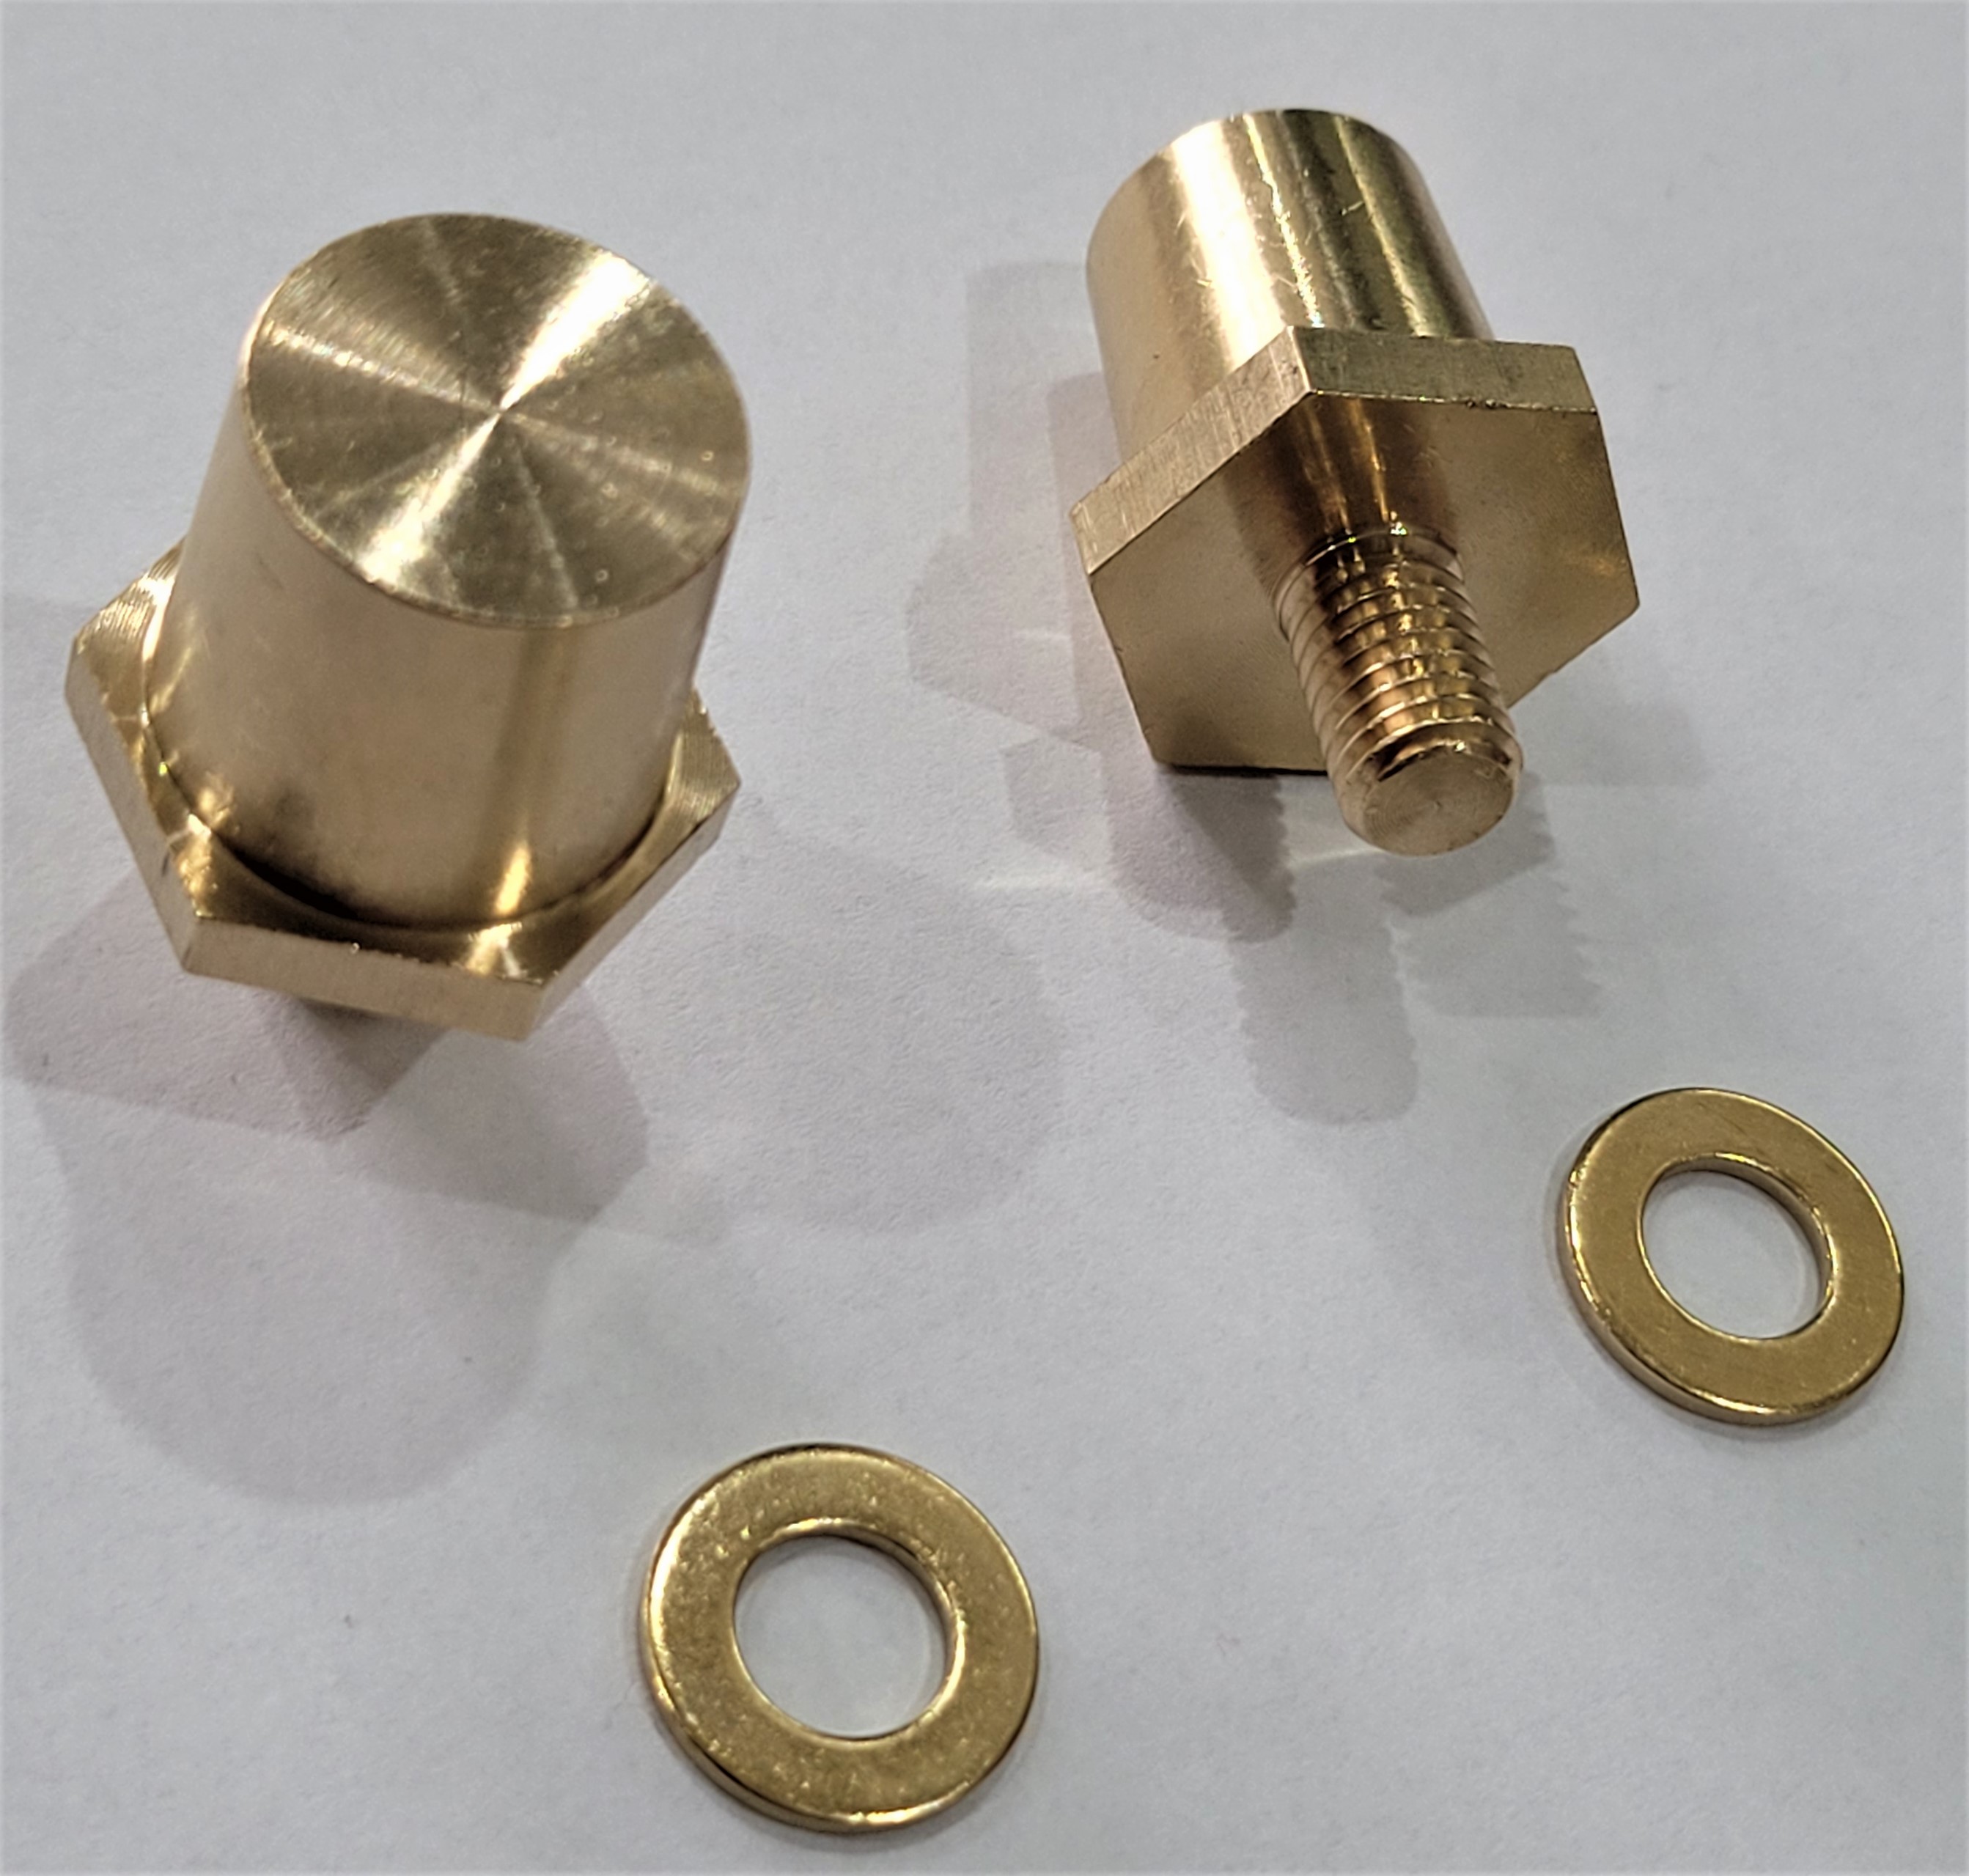 New brass battery terminal posts adaptors: